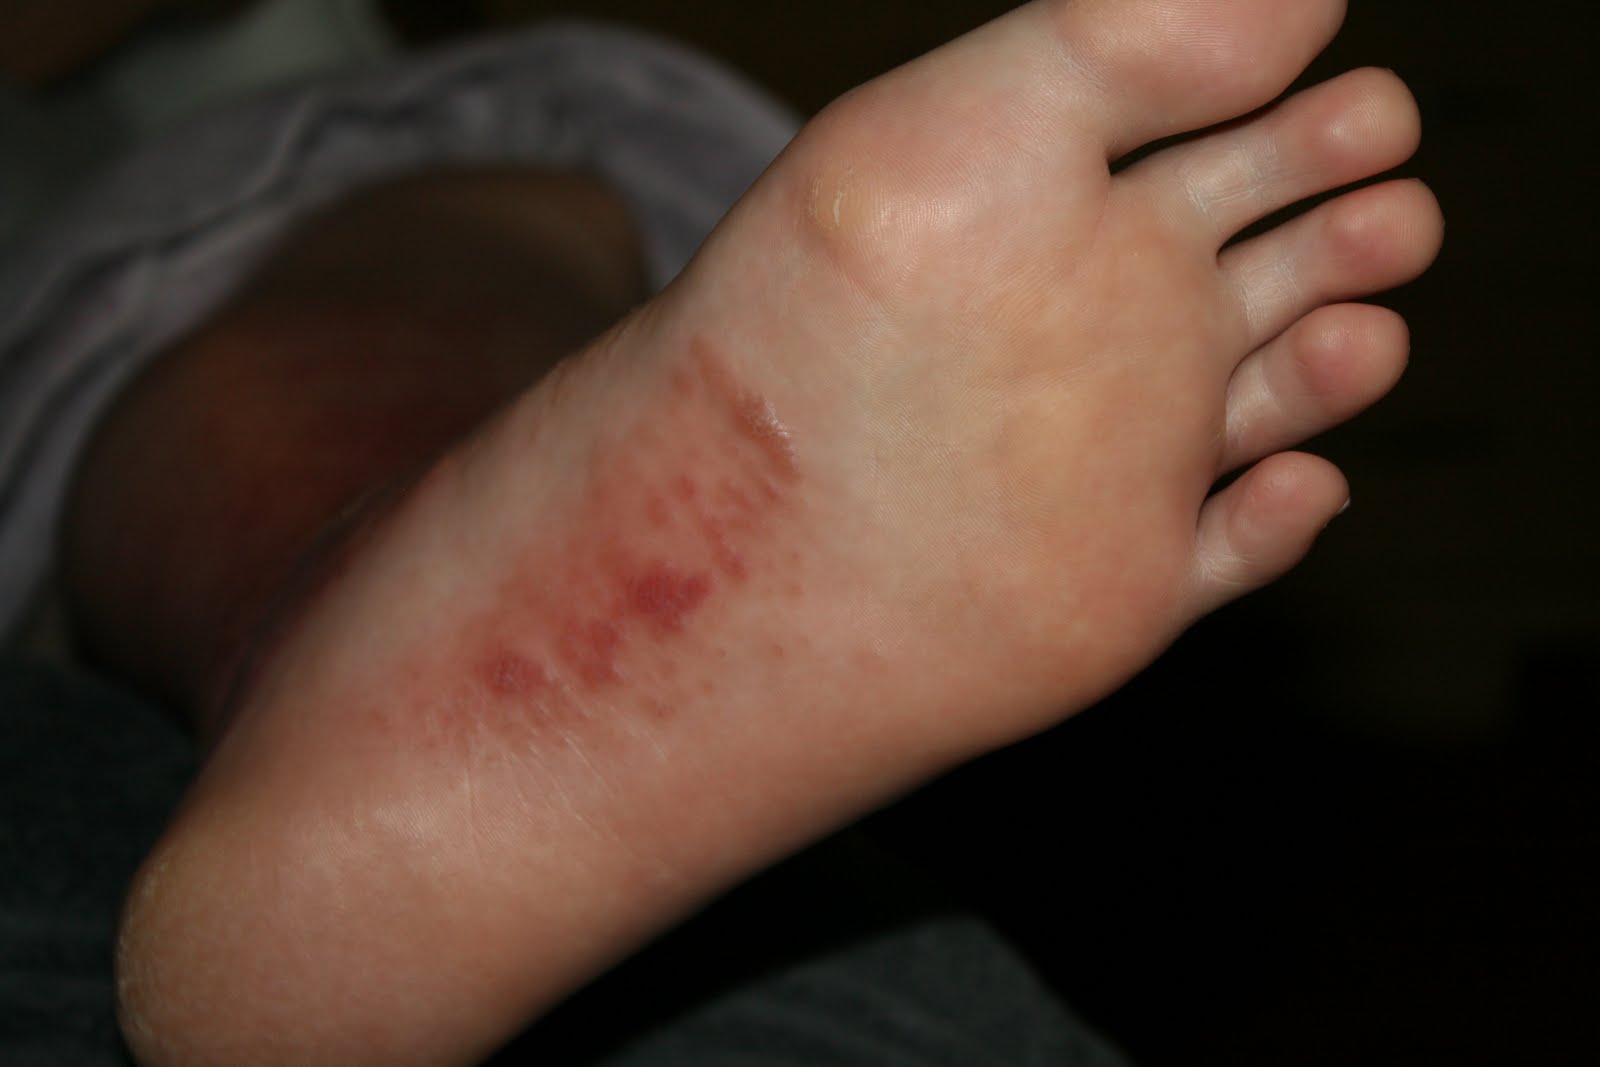 Tiny foot blisters - Dermatology - MedHelp